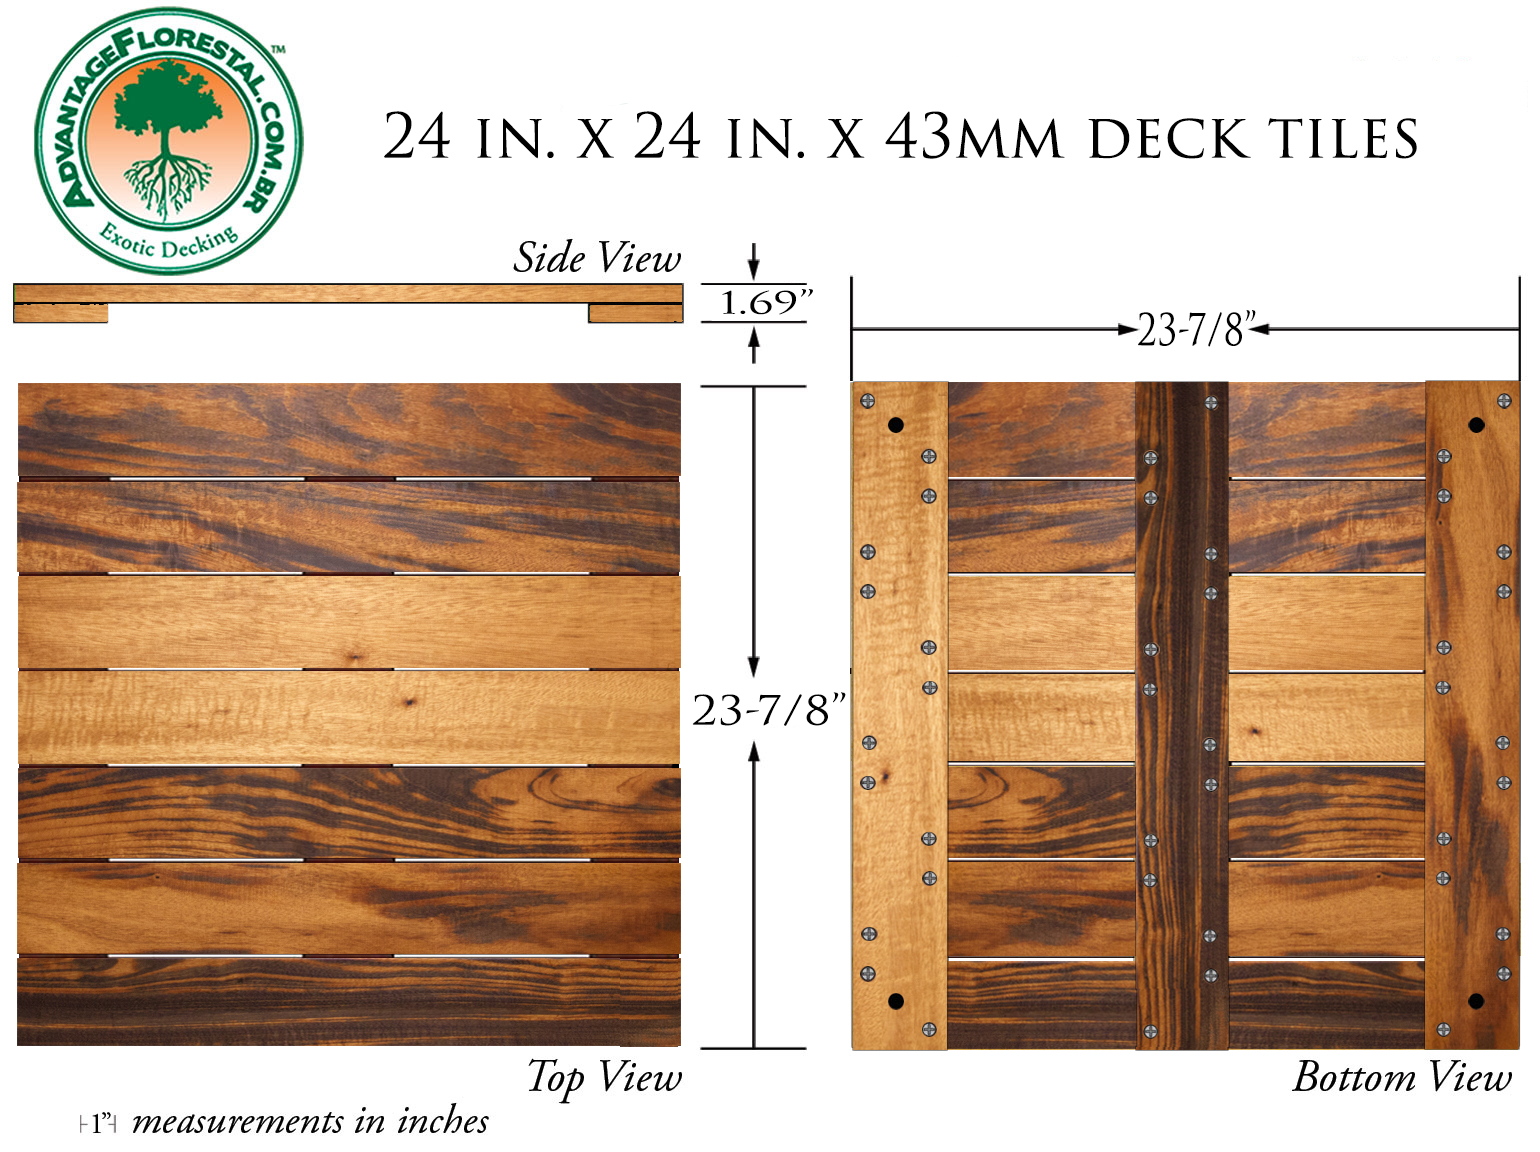 Tigerwood Deck Tile 24 in. x 24 in. x 43mm